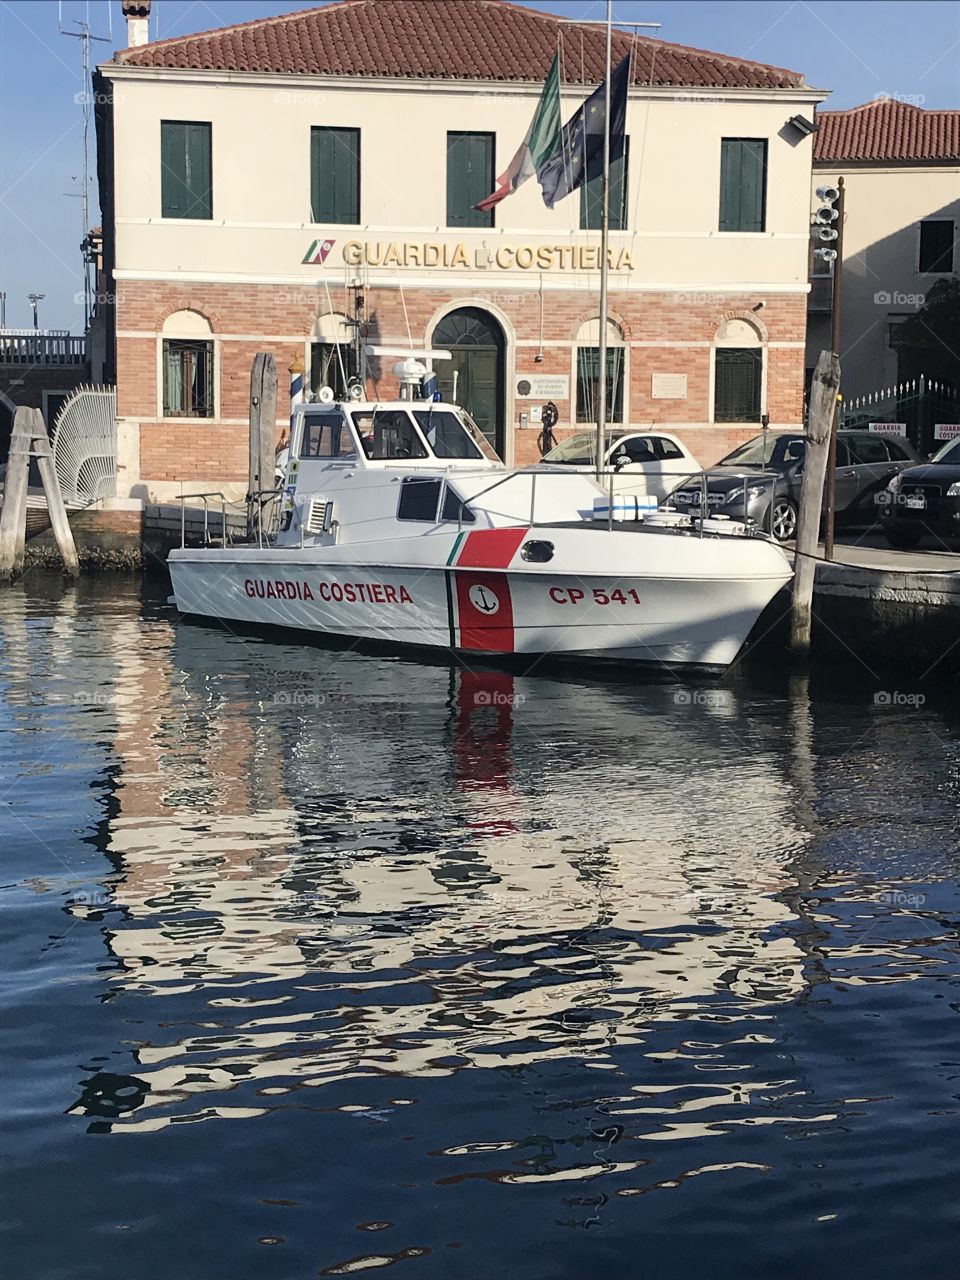 Vessel Guardia Costiera near the Venice